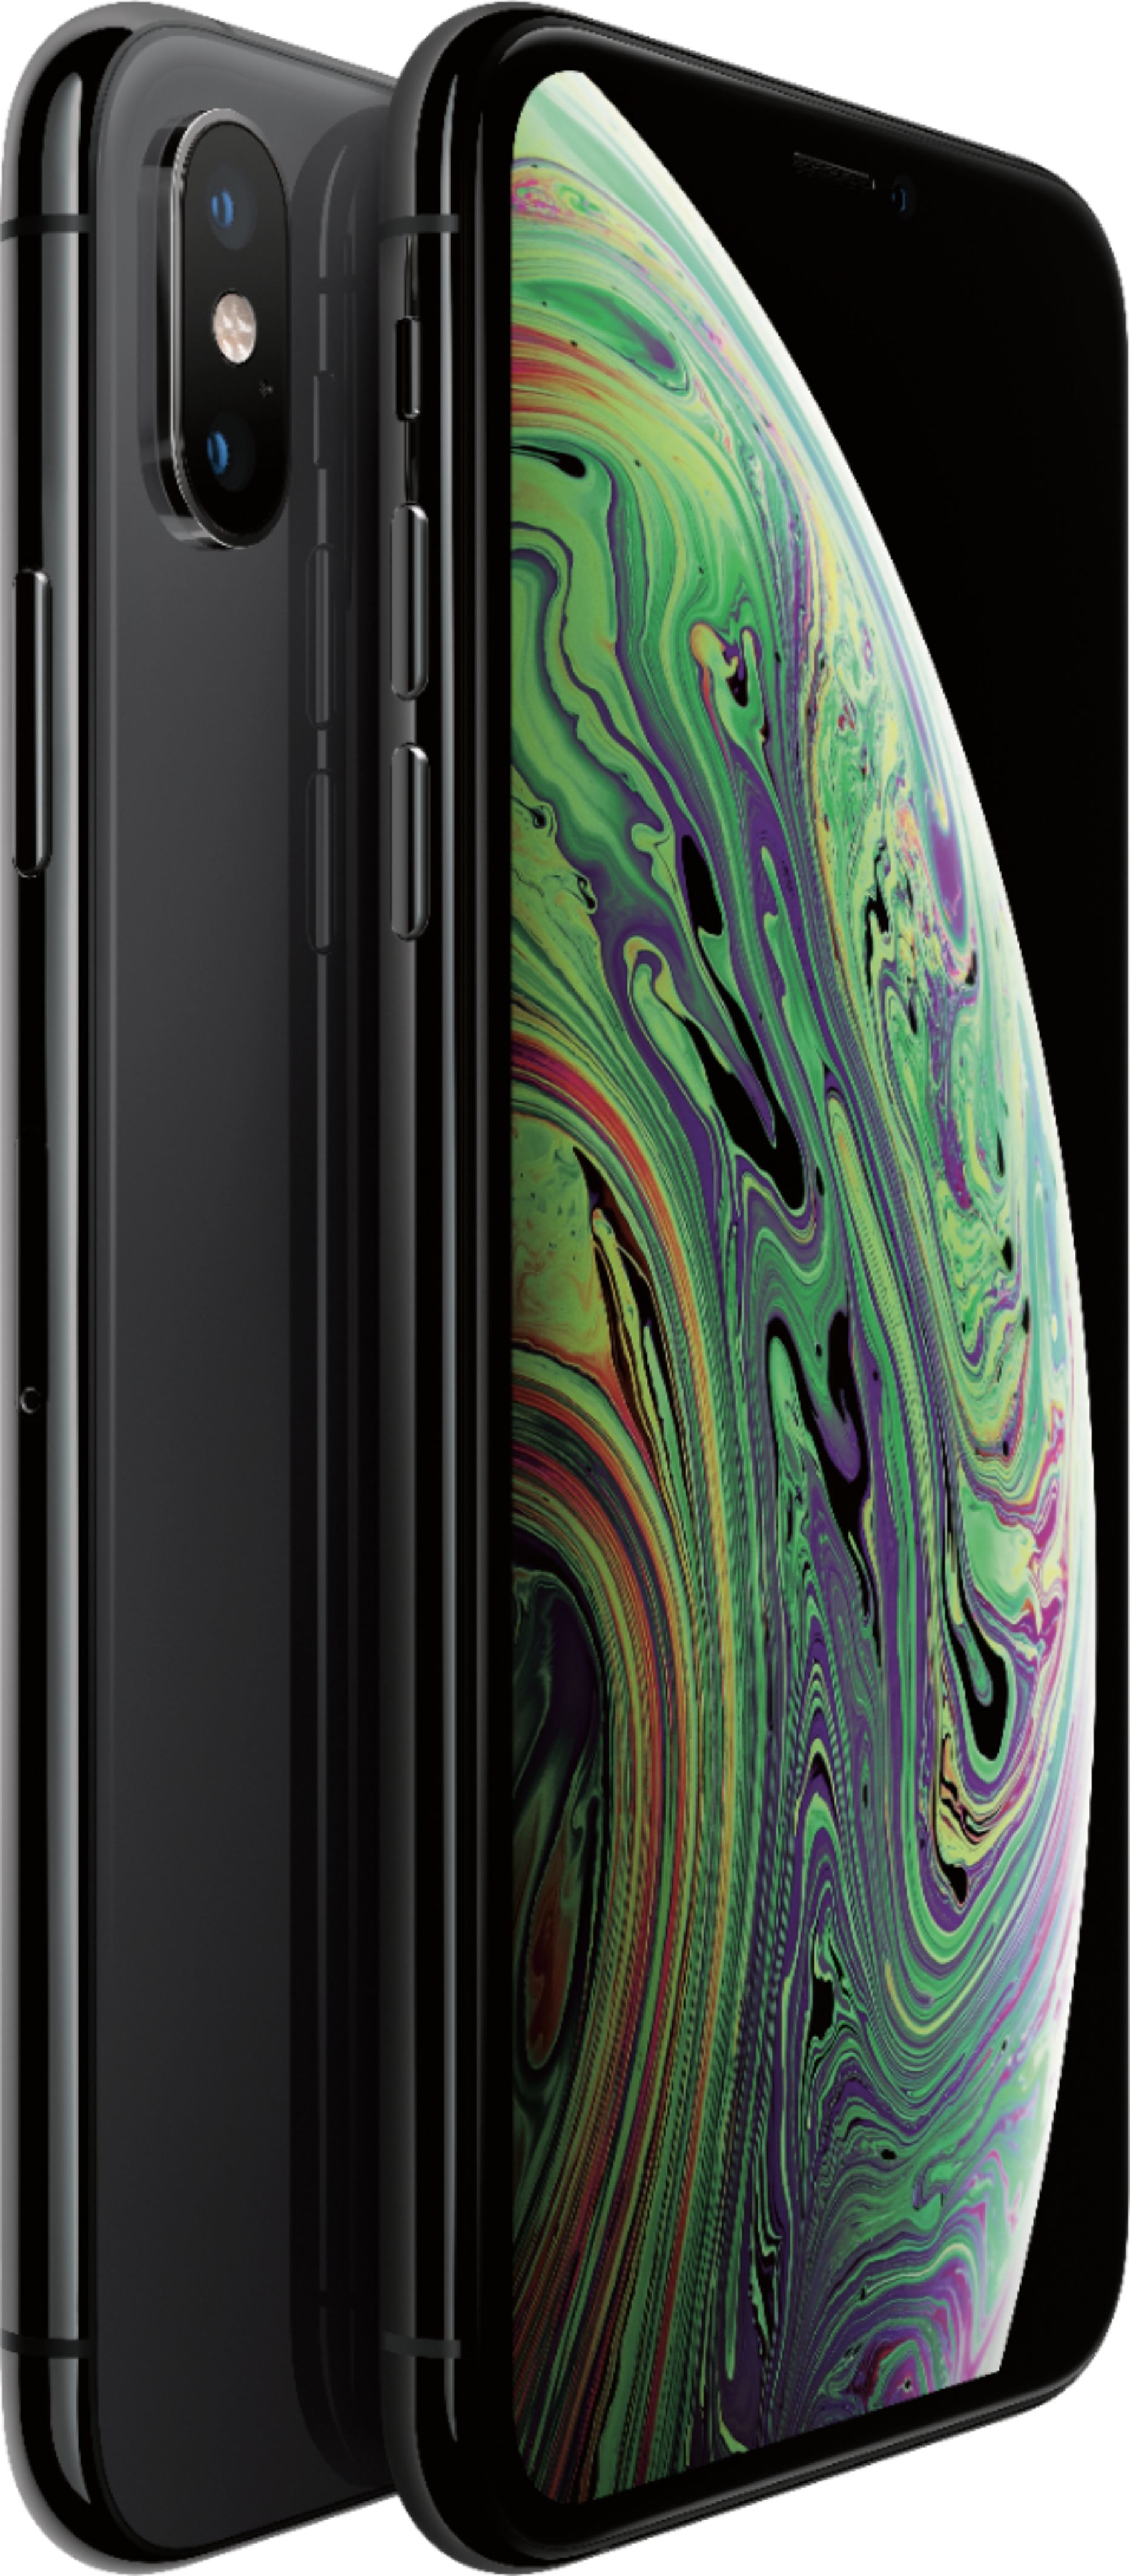 Best Buy Apple iPhone XS 64GB Space Gray (Verizon) MT942LL/A